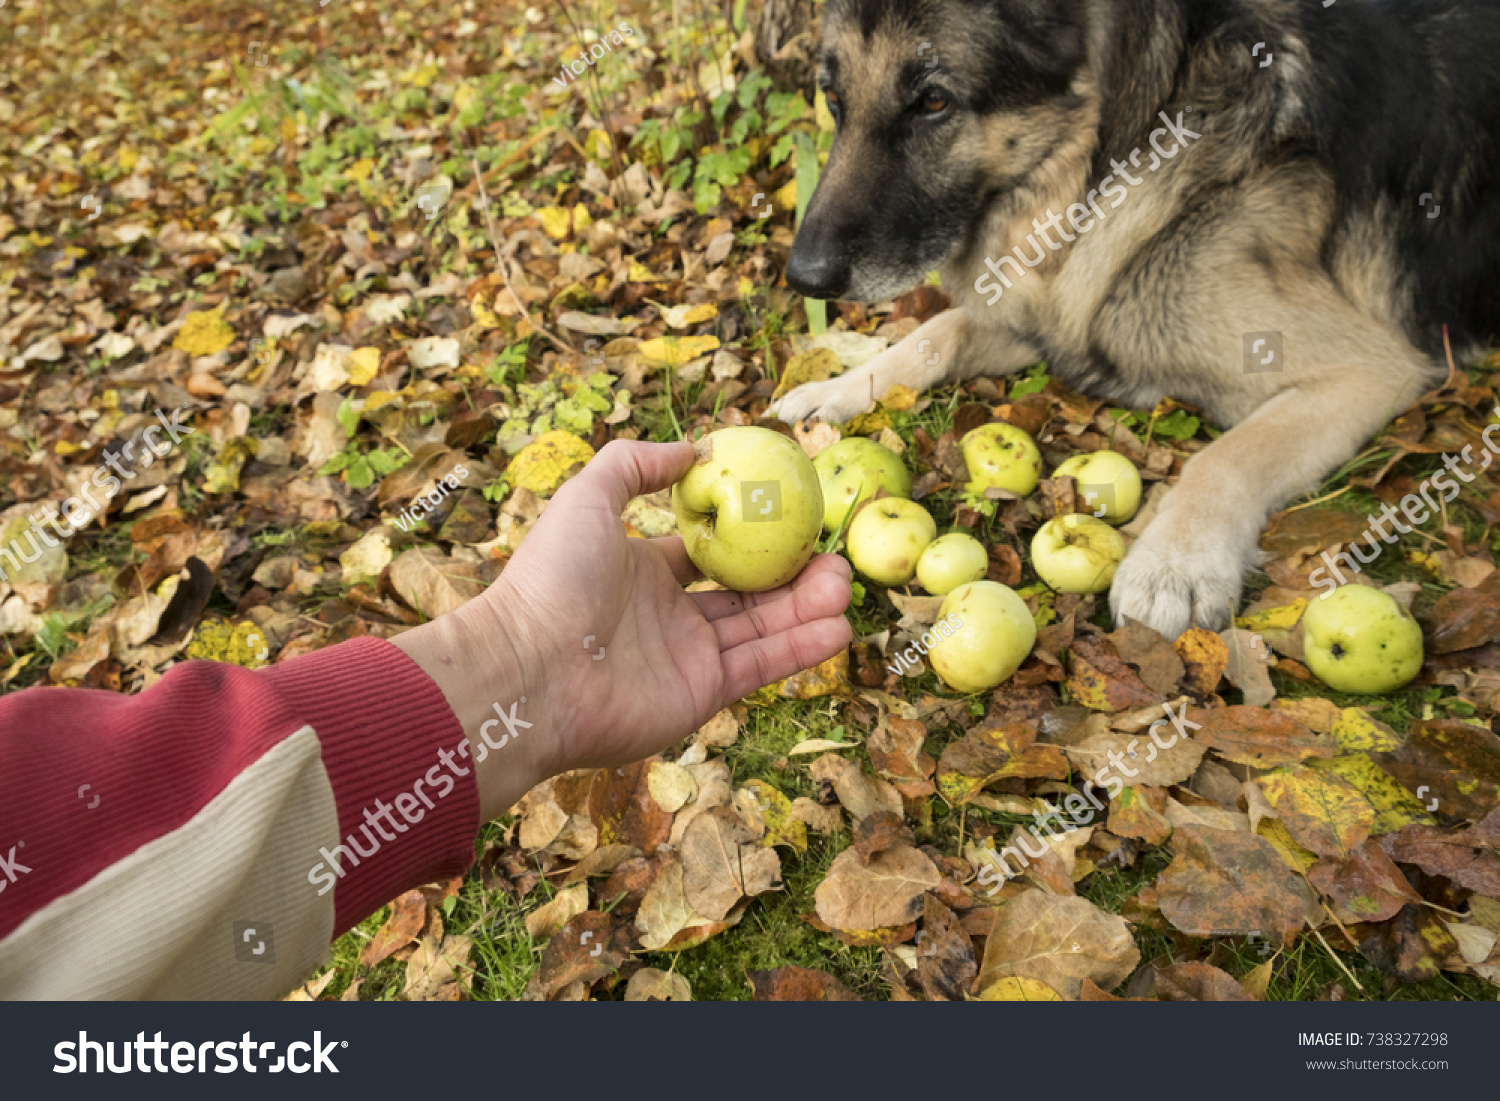 man teasing dog about food